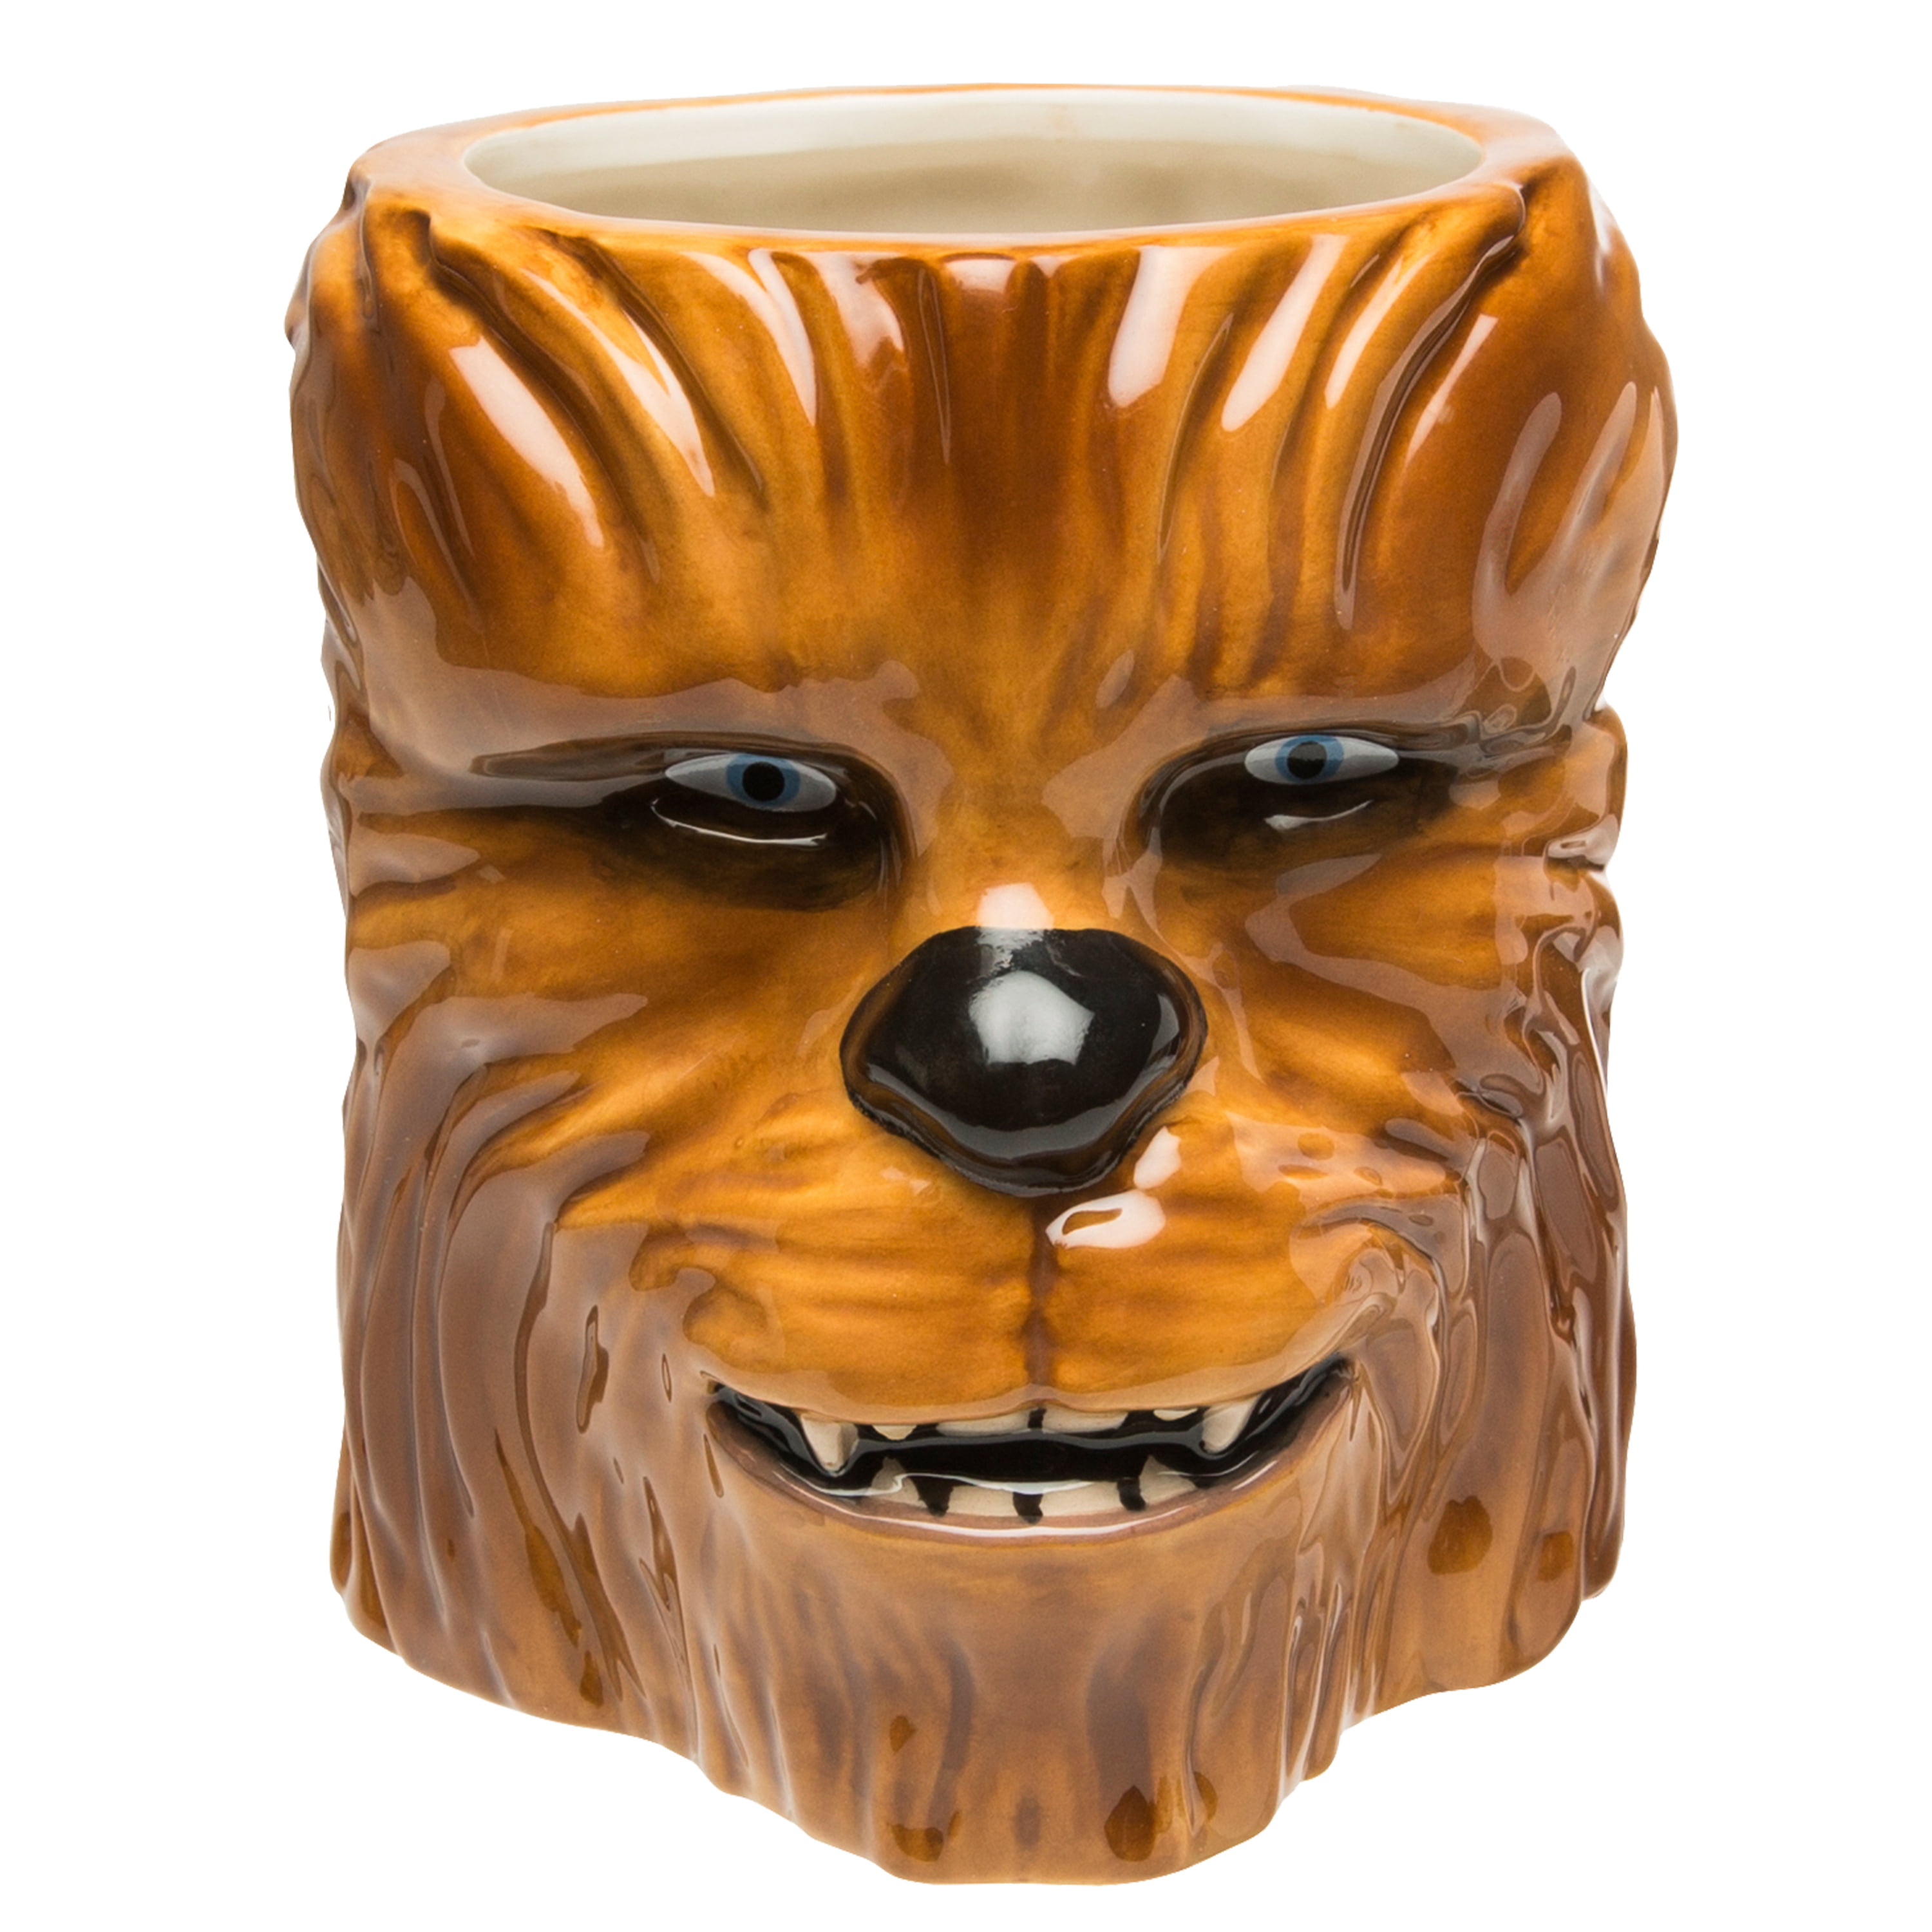 Star Wars Chewbacca Mug